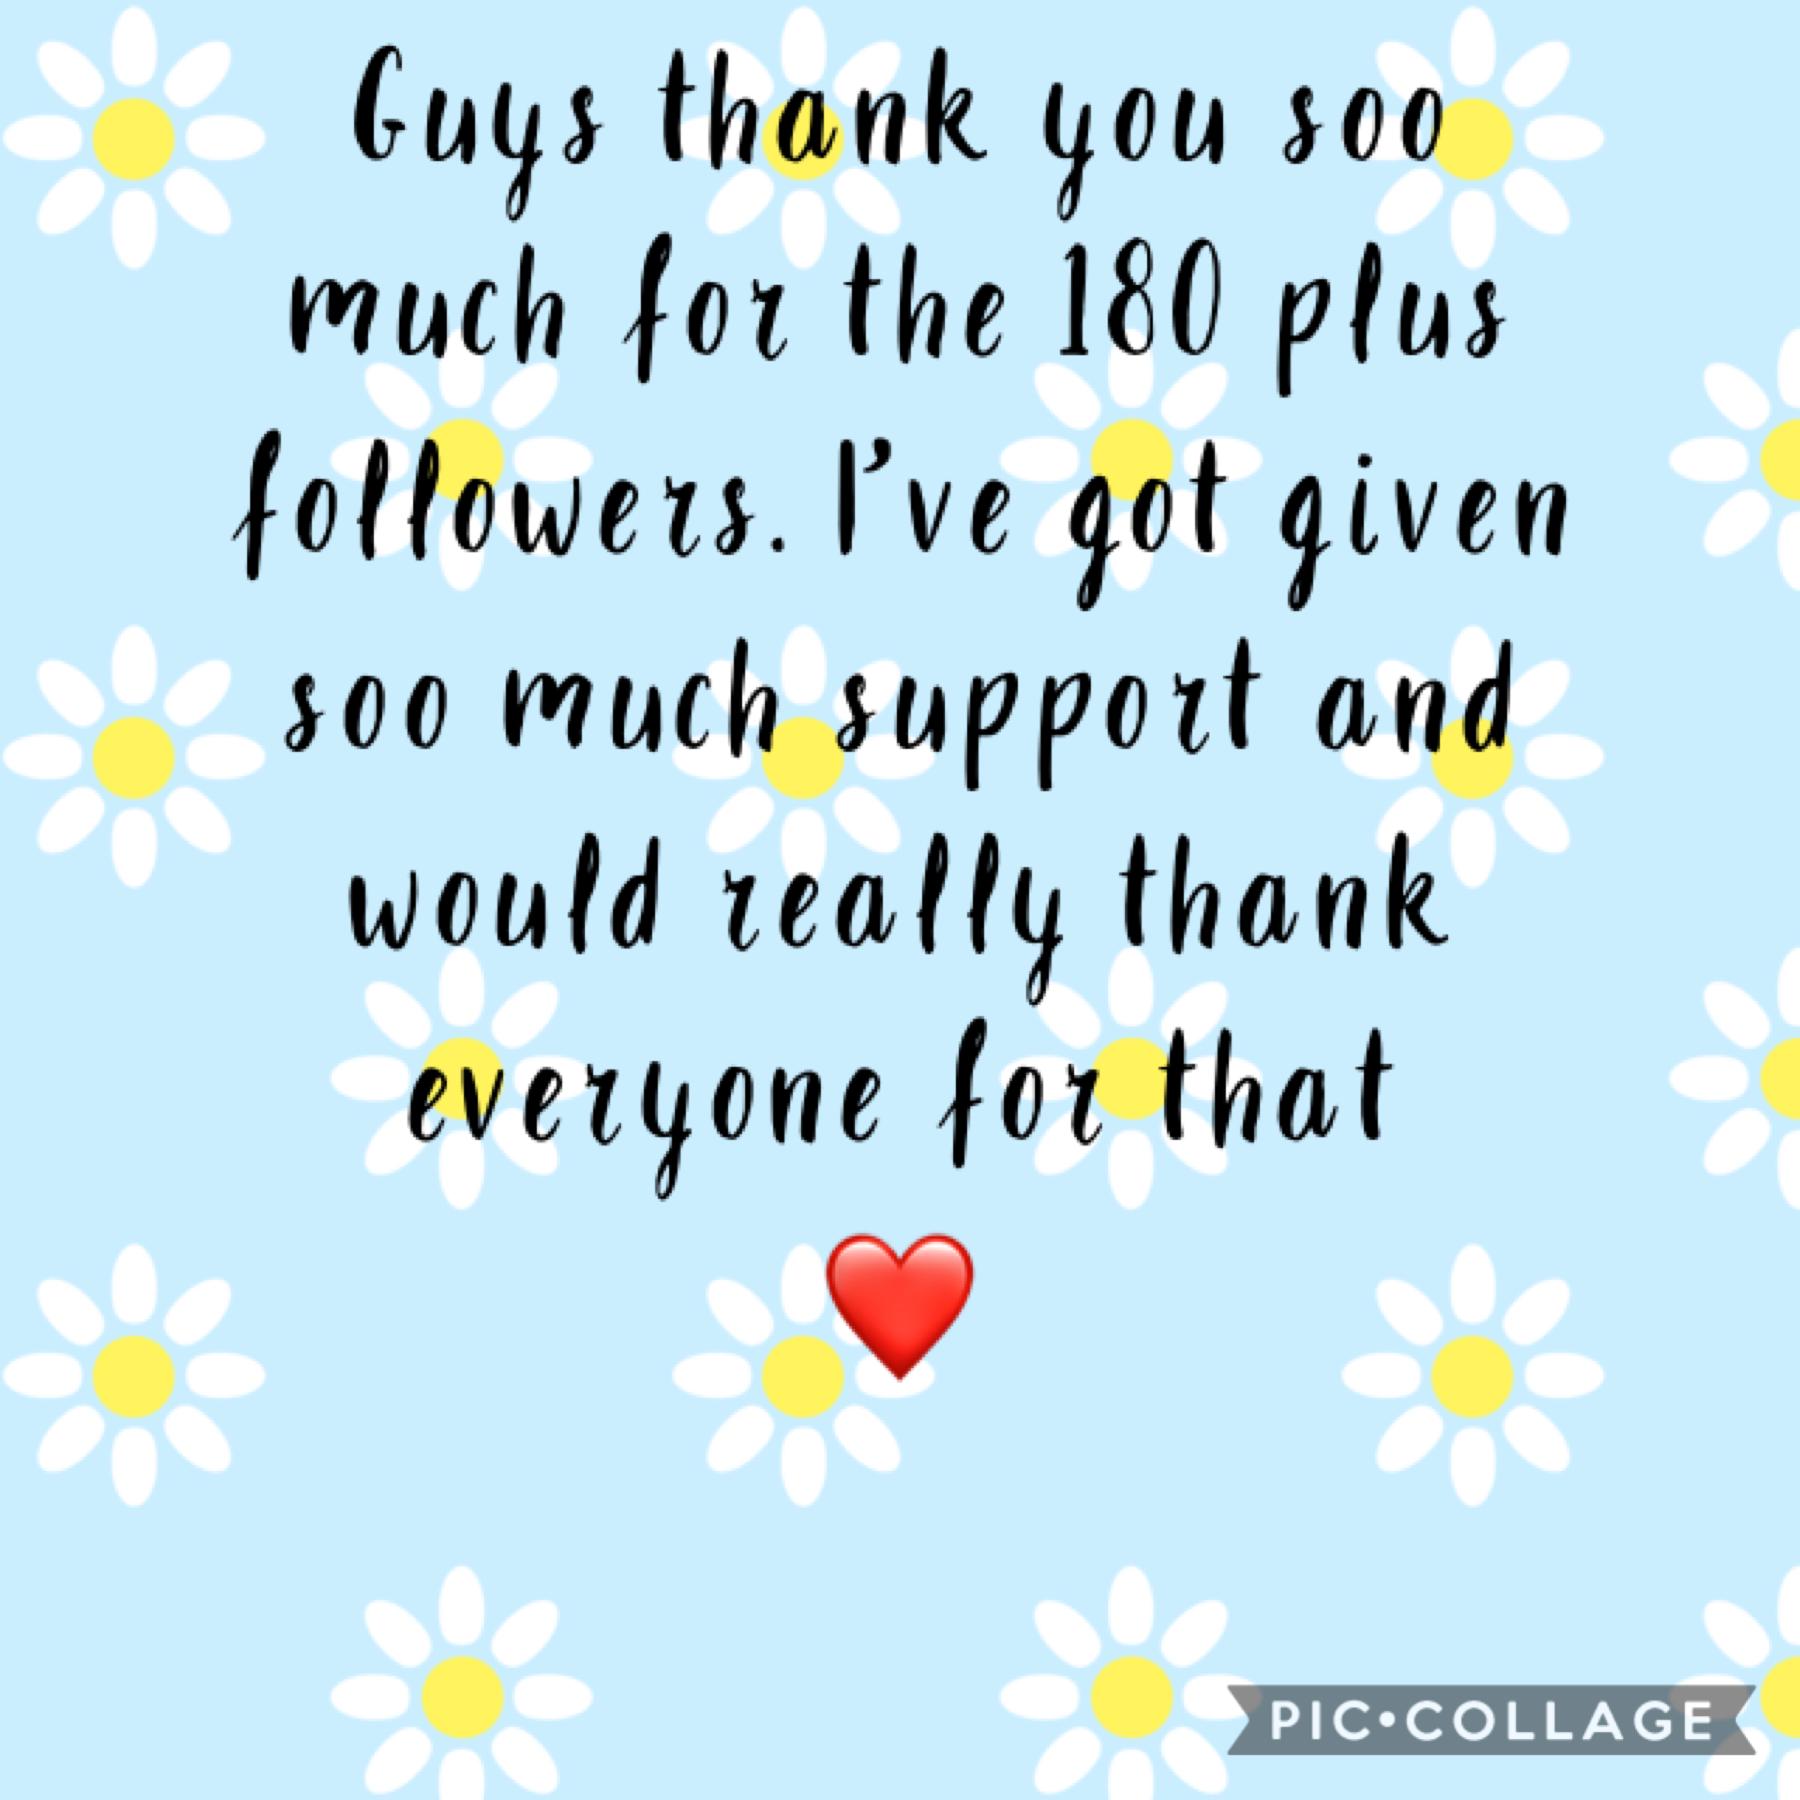 Thank you guys ❤️